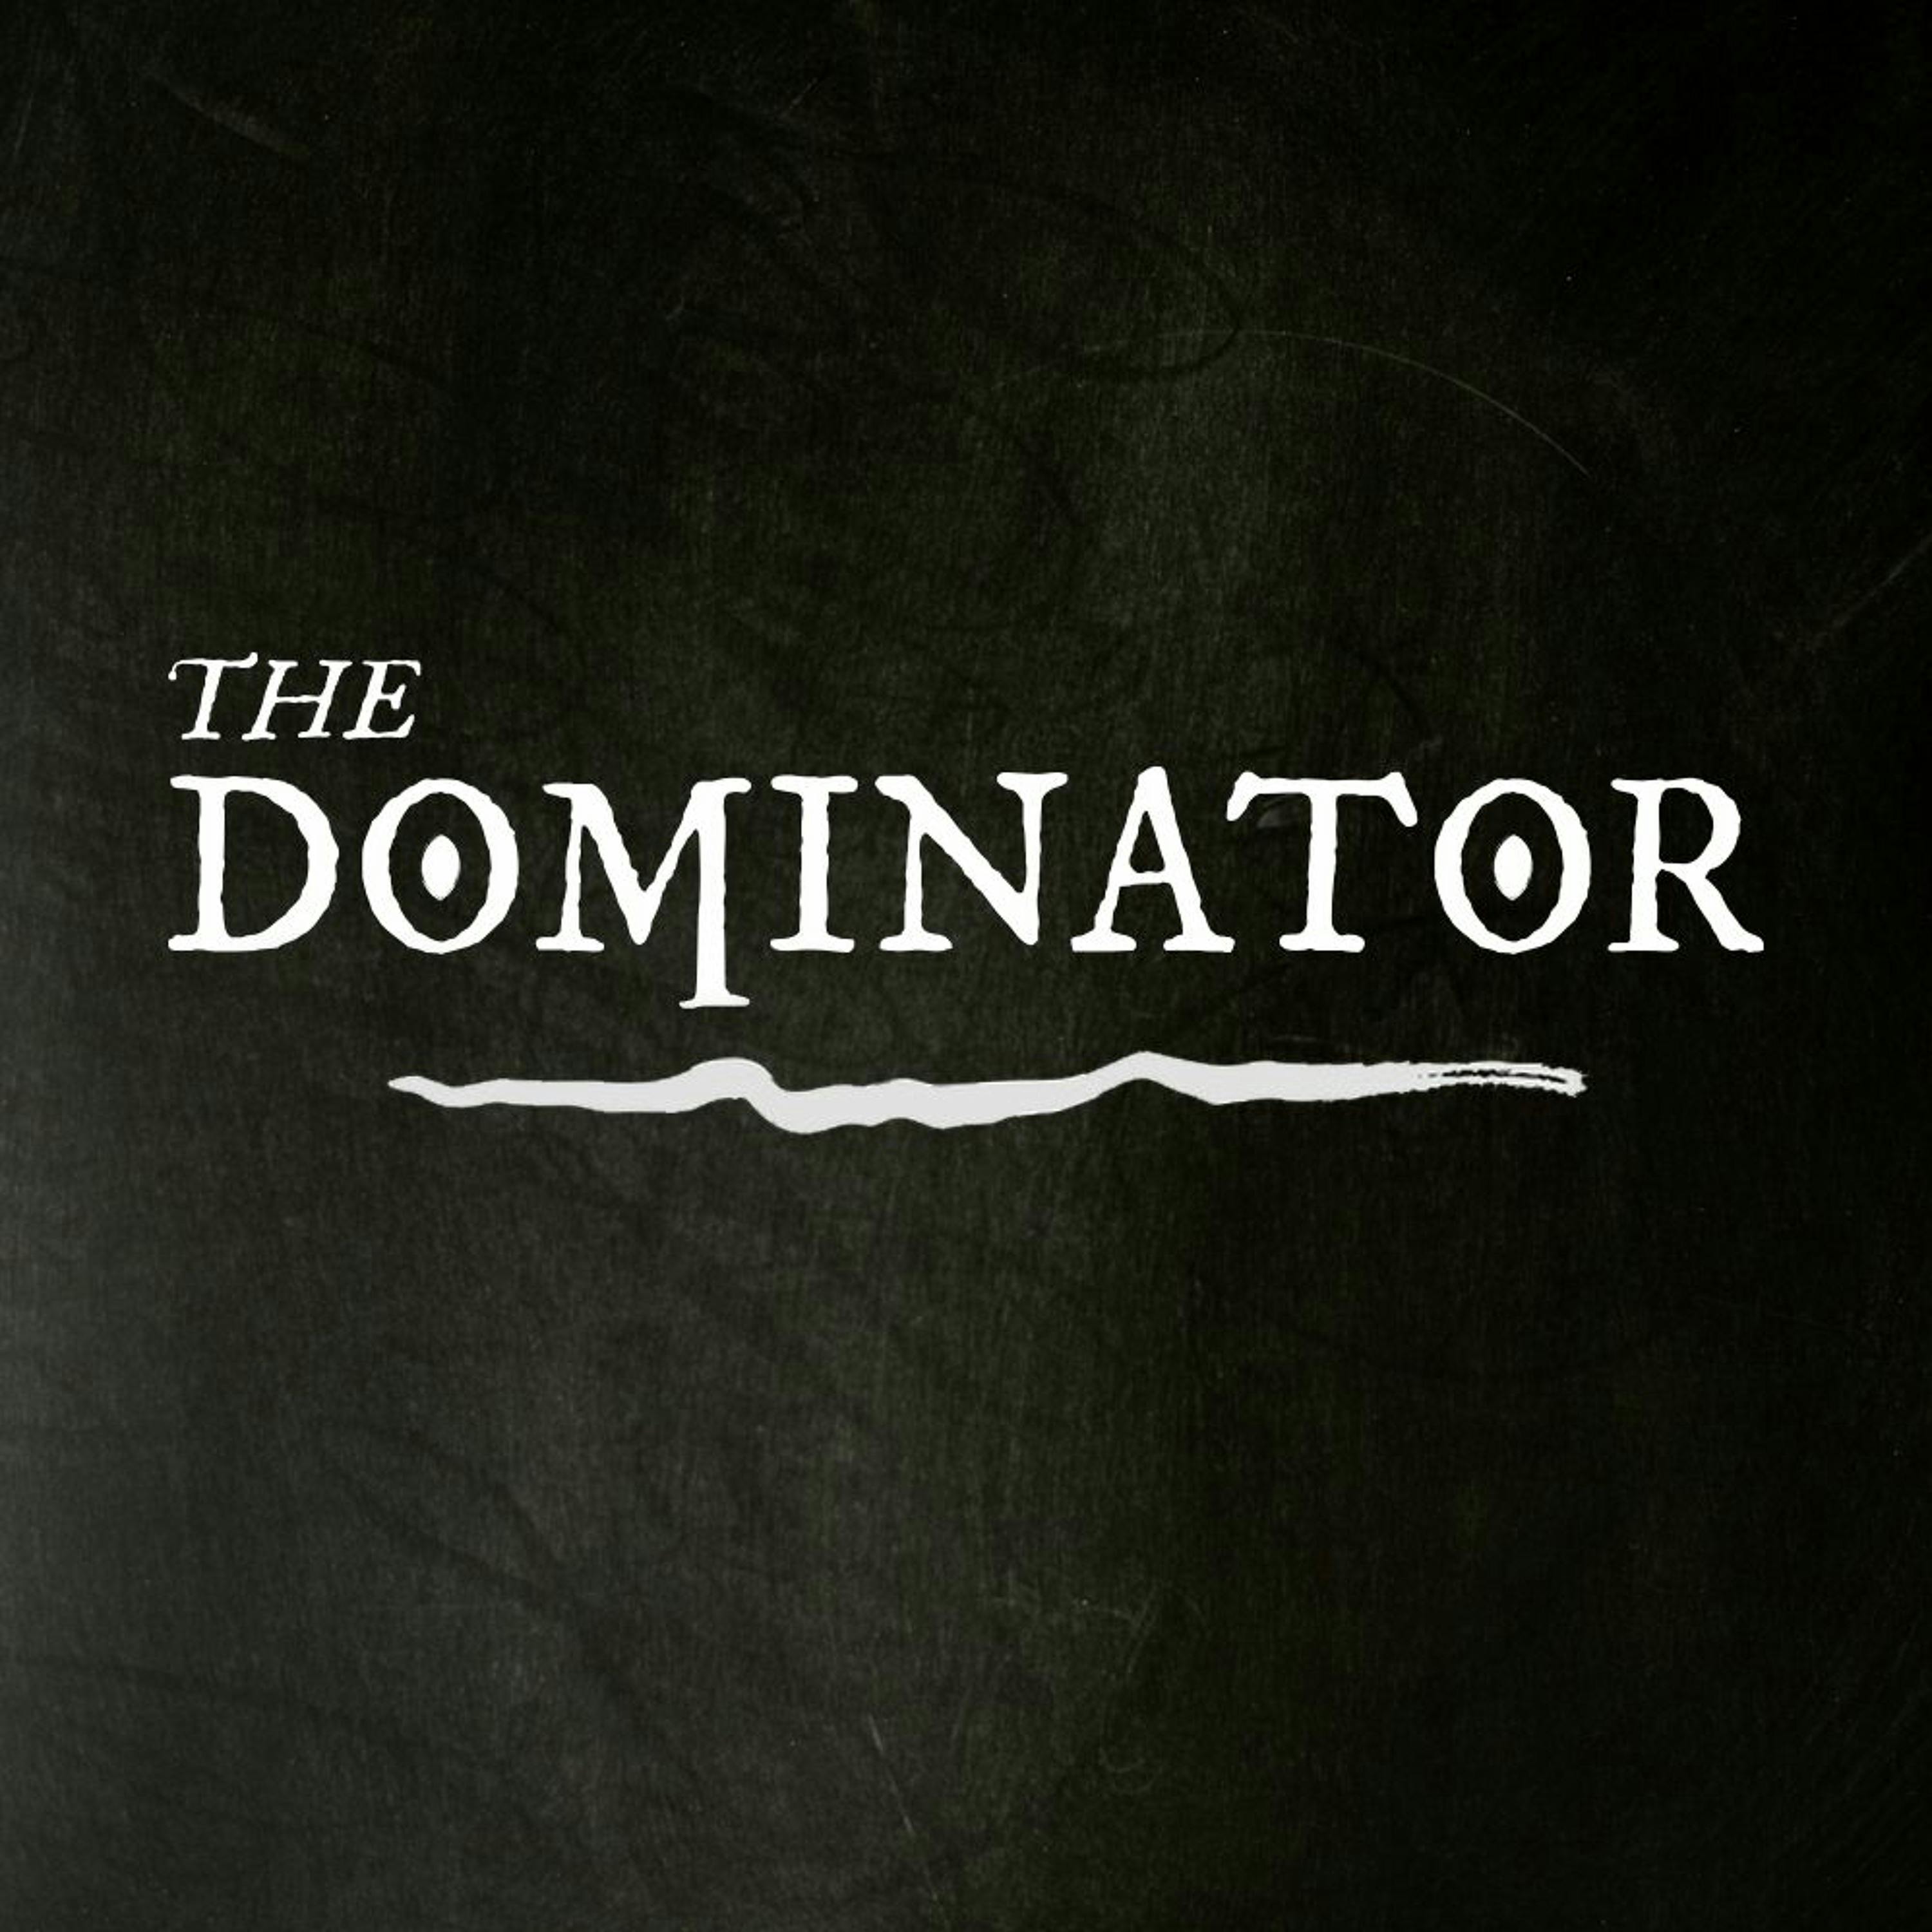 Josh Allen time traveler - The Dominator